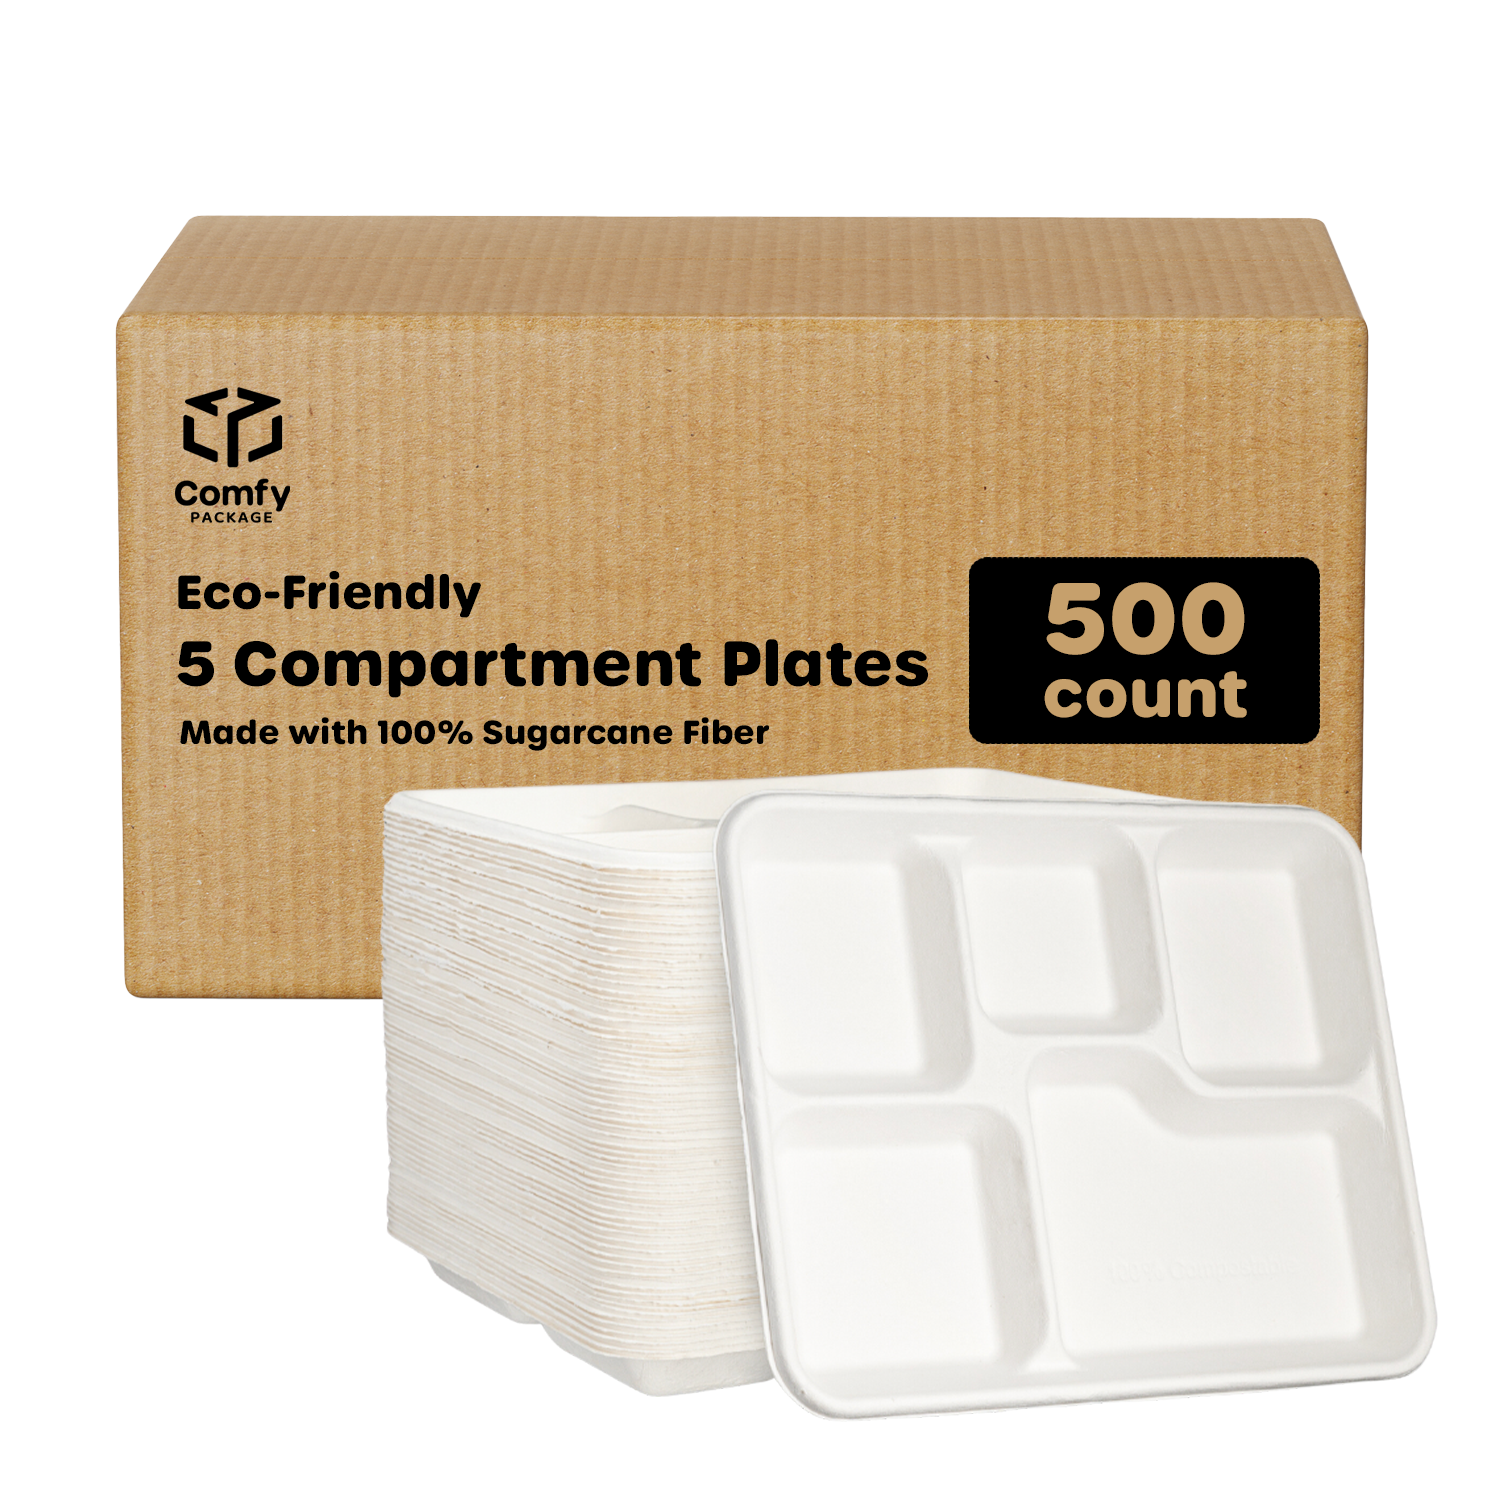 9-inch Non-laminated Foam Plates (case of 500)